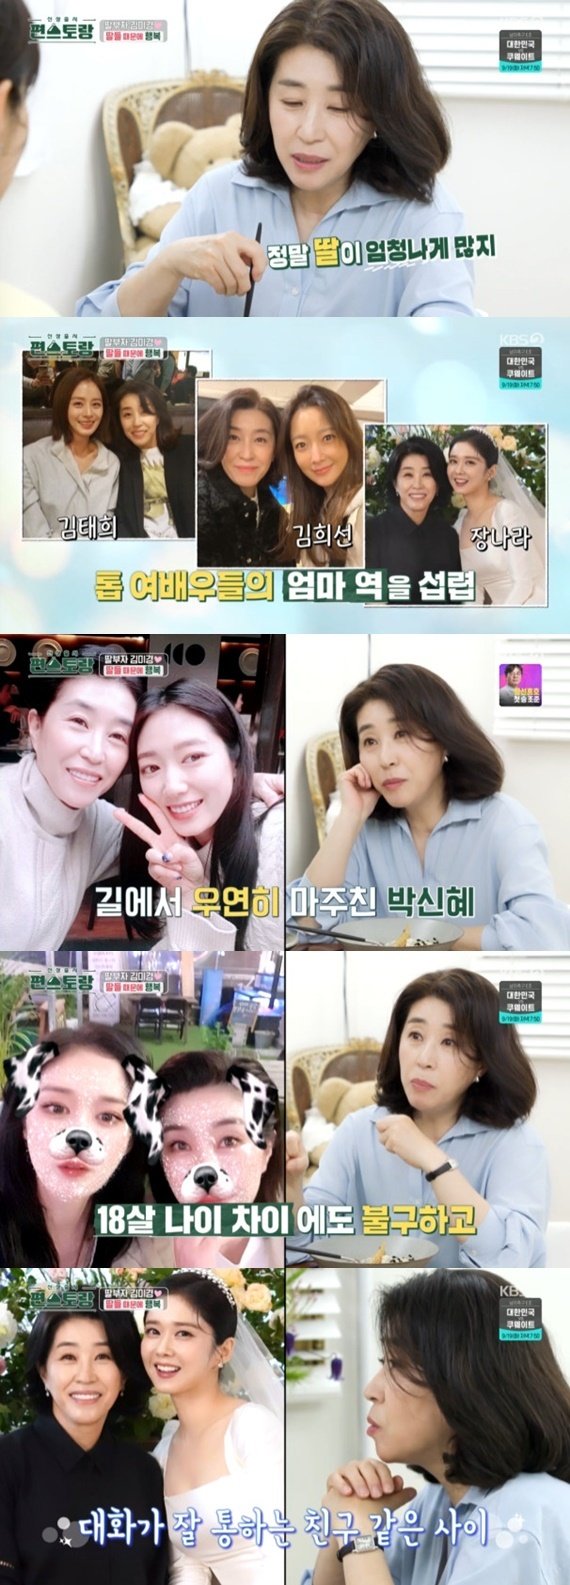 KBS2TV ‘신상출시 편스토랑’ 캡처